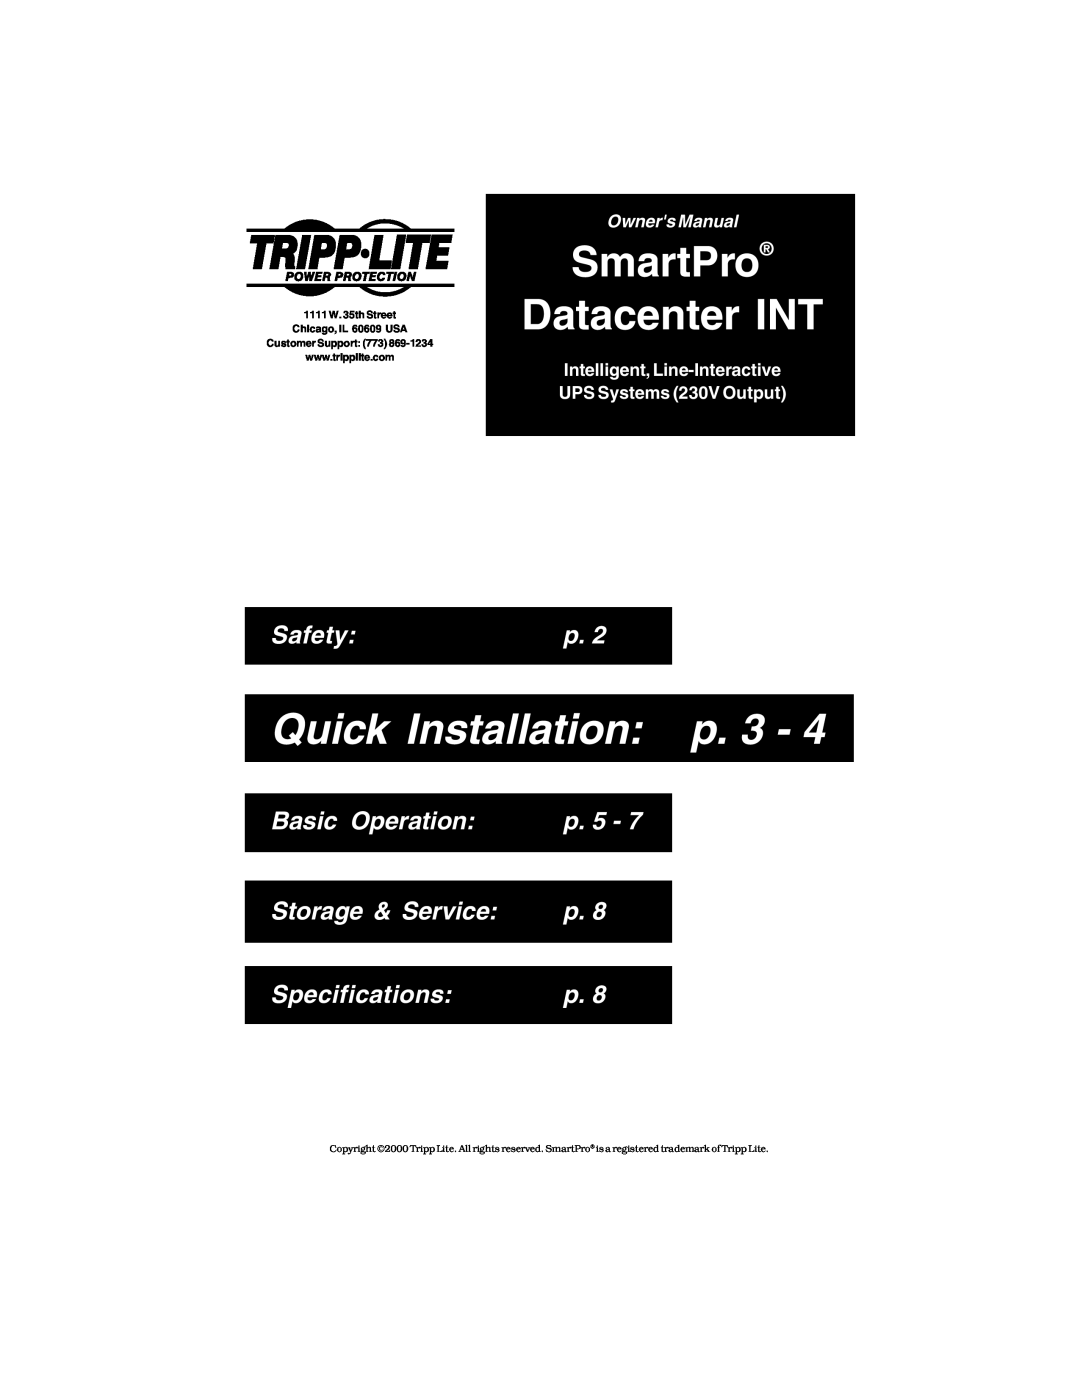 Tripp Lite specifications SmartPro Datacenter INT, Quick Installation p. 3, Safety, Basic Operation, p. 5 